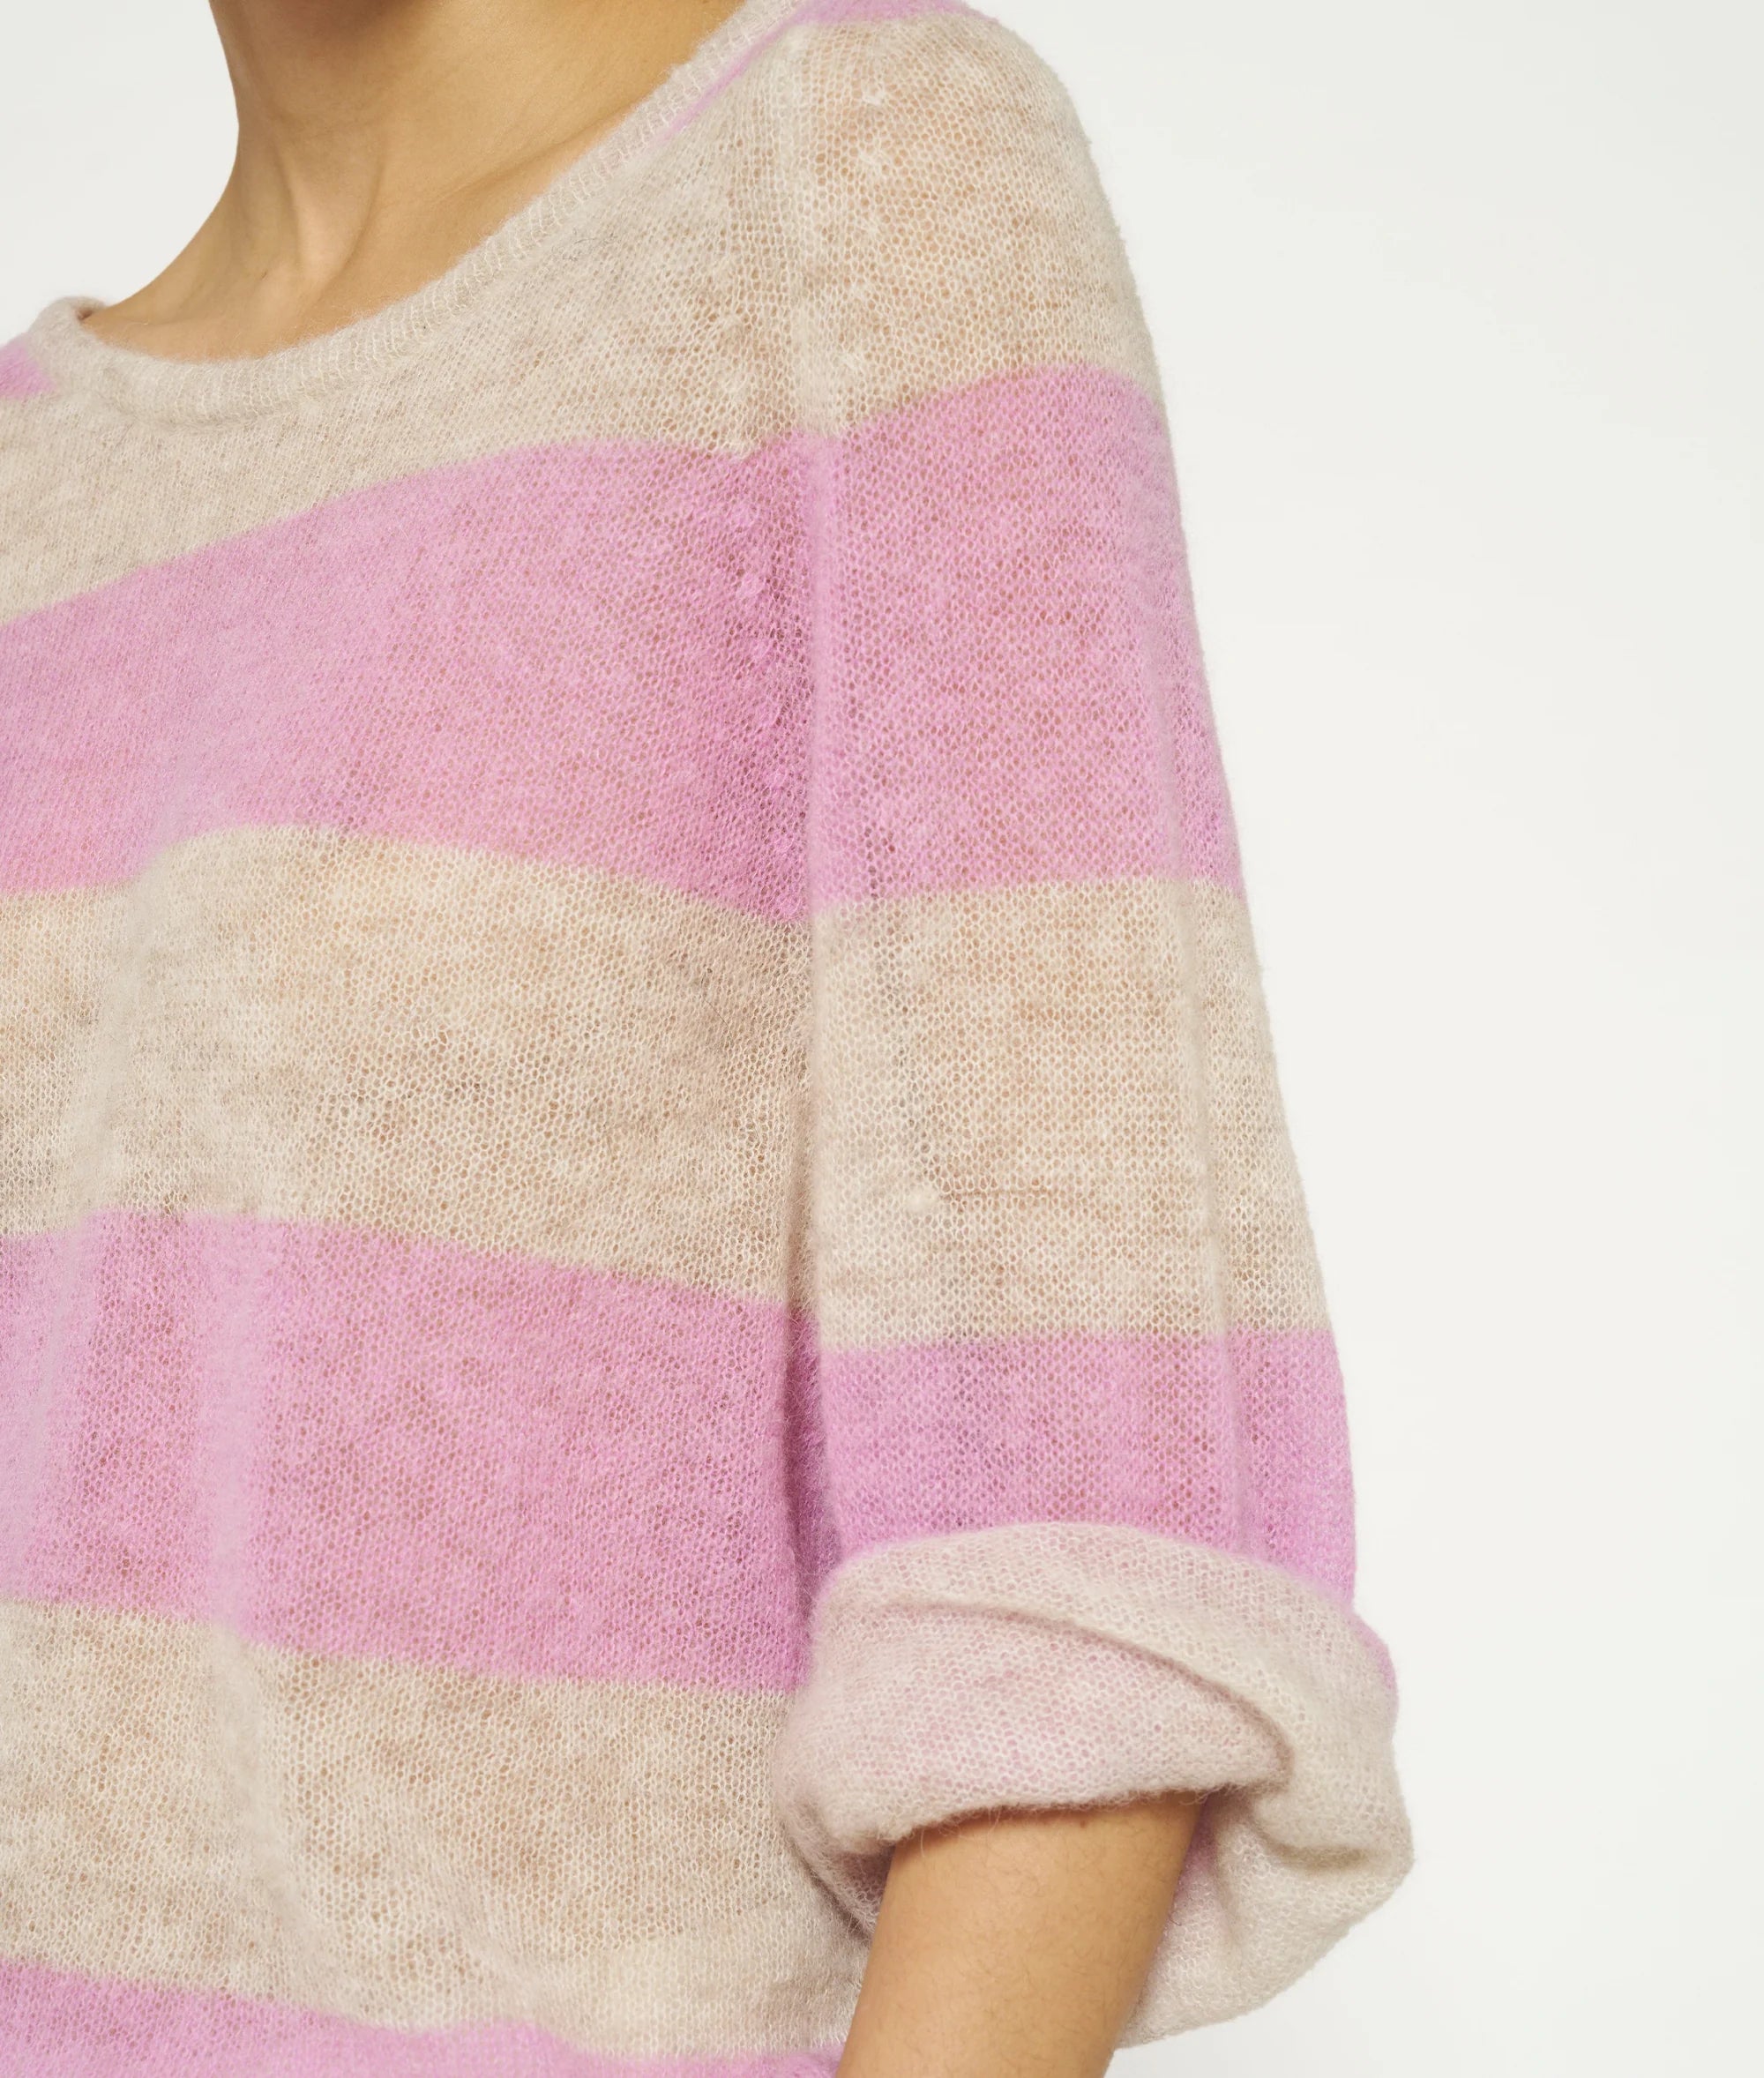 10DAYS - sweater thin knit stripes